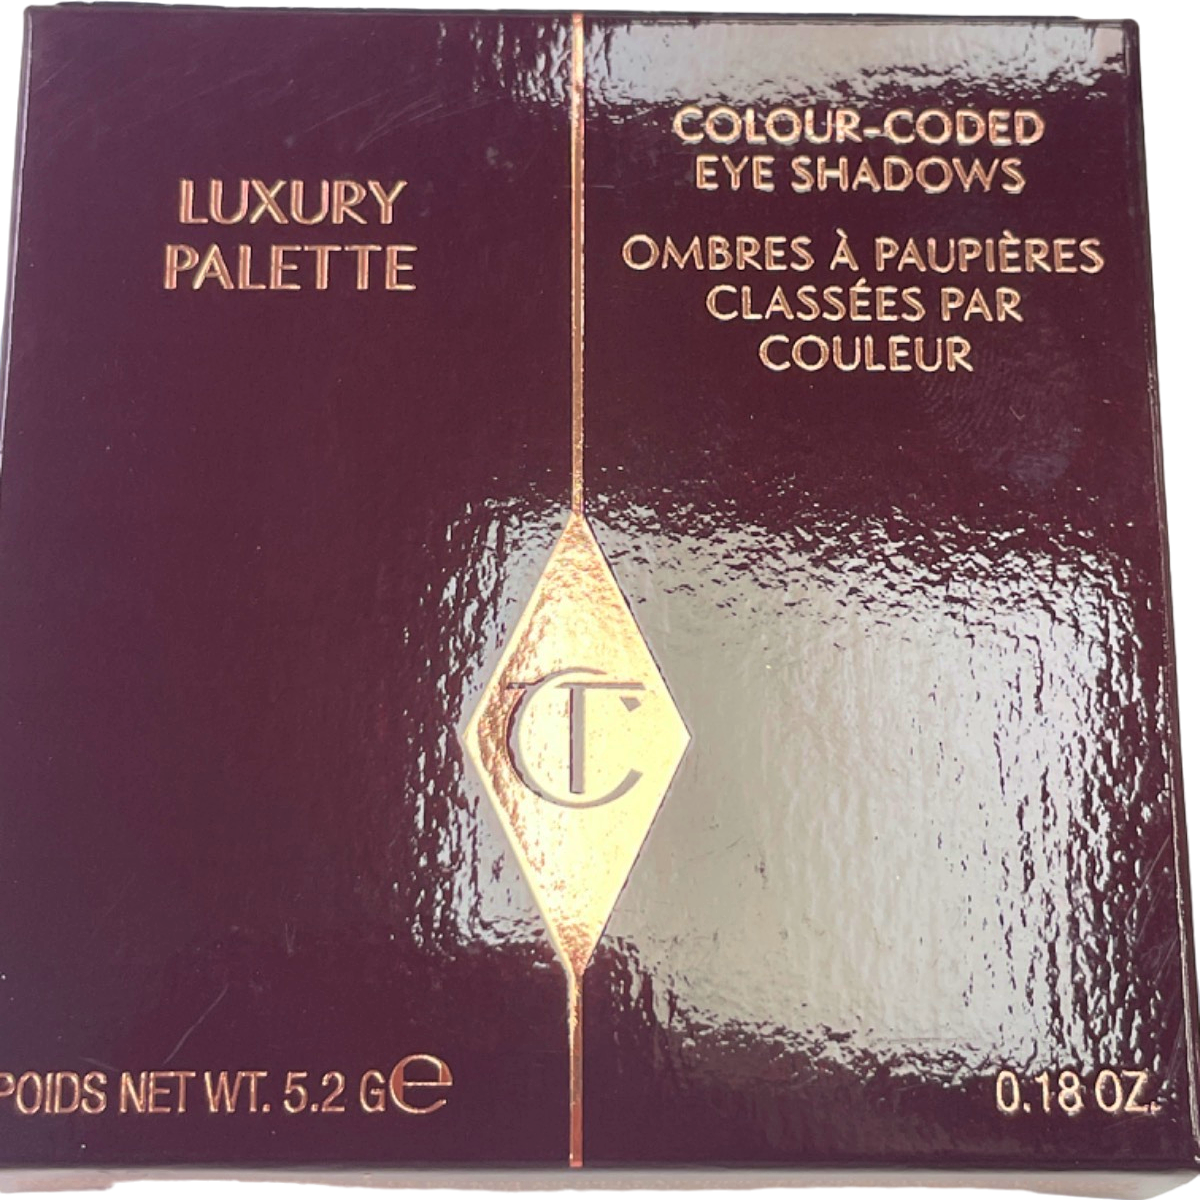 Charlotte Tilbury Luxury Palette The Vintage Vamp 5.2g